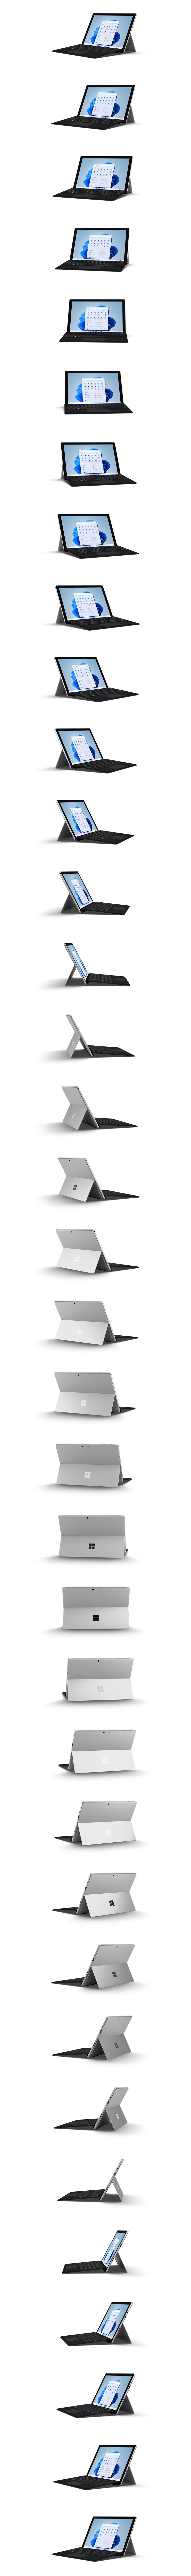 جهاز Surface Pro 7+ معروض بدوران 360 درجة.